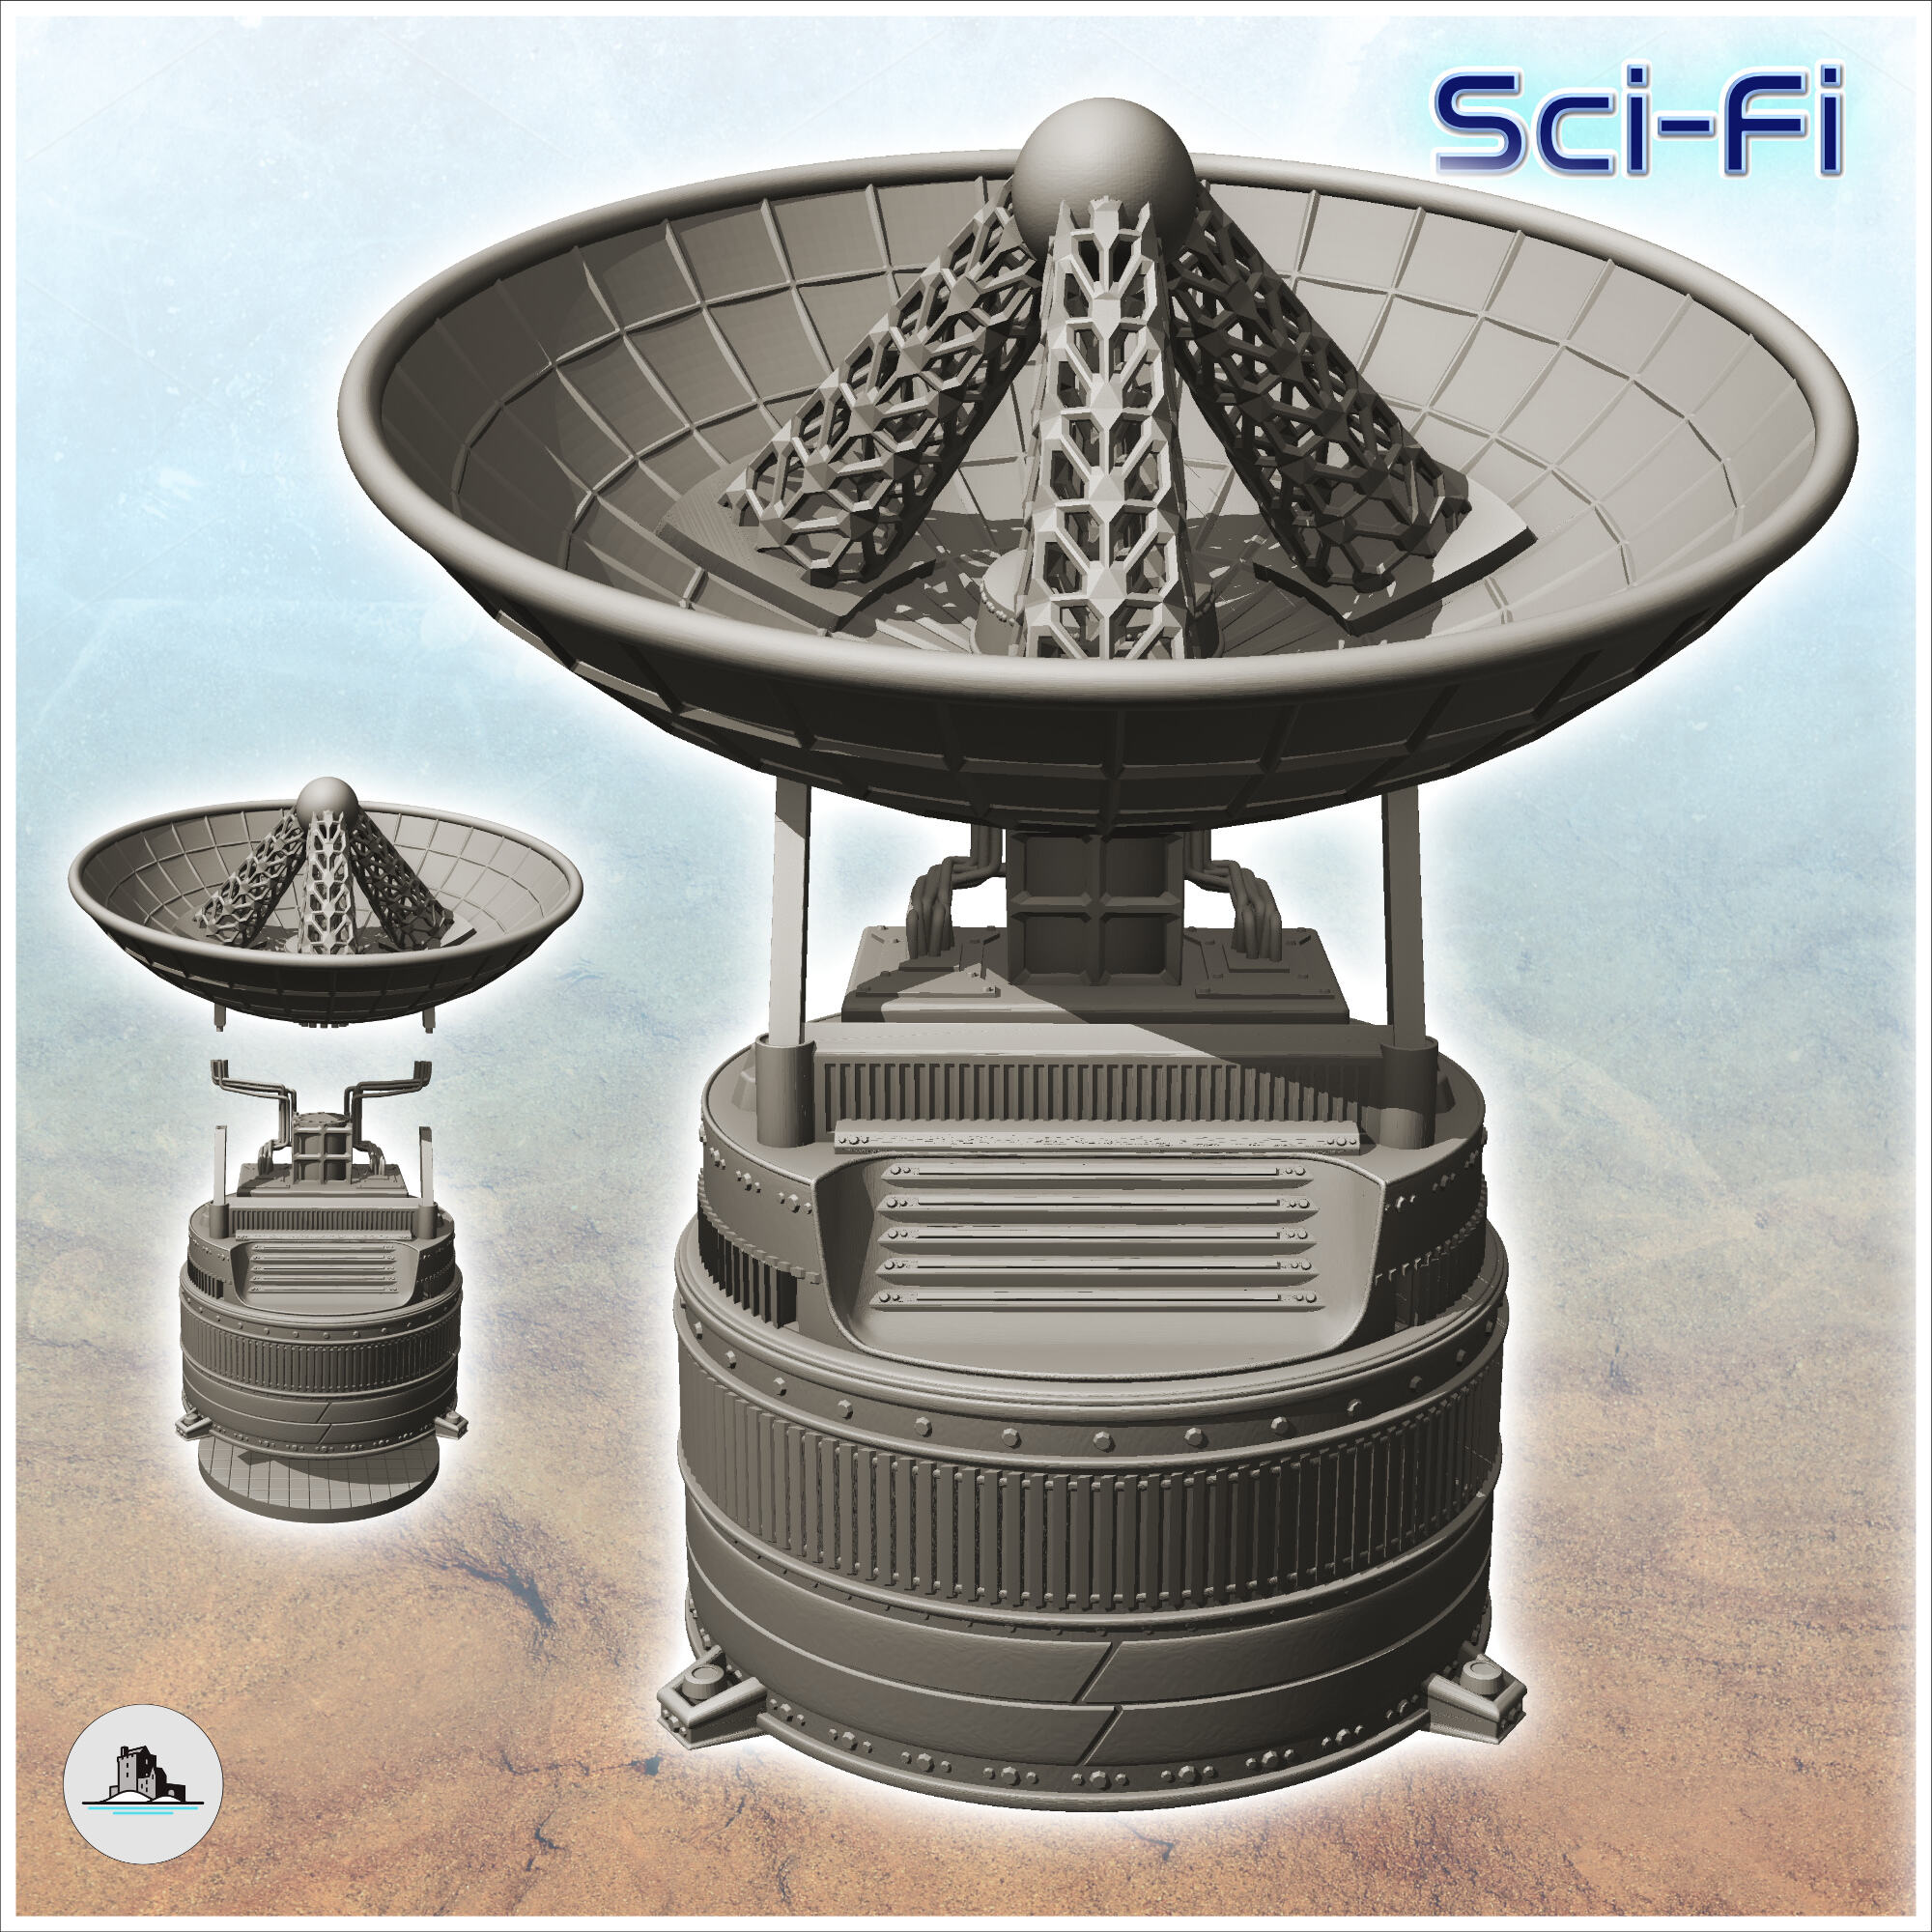 Circular antenna - Terrain Scifi Science fiction SF